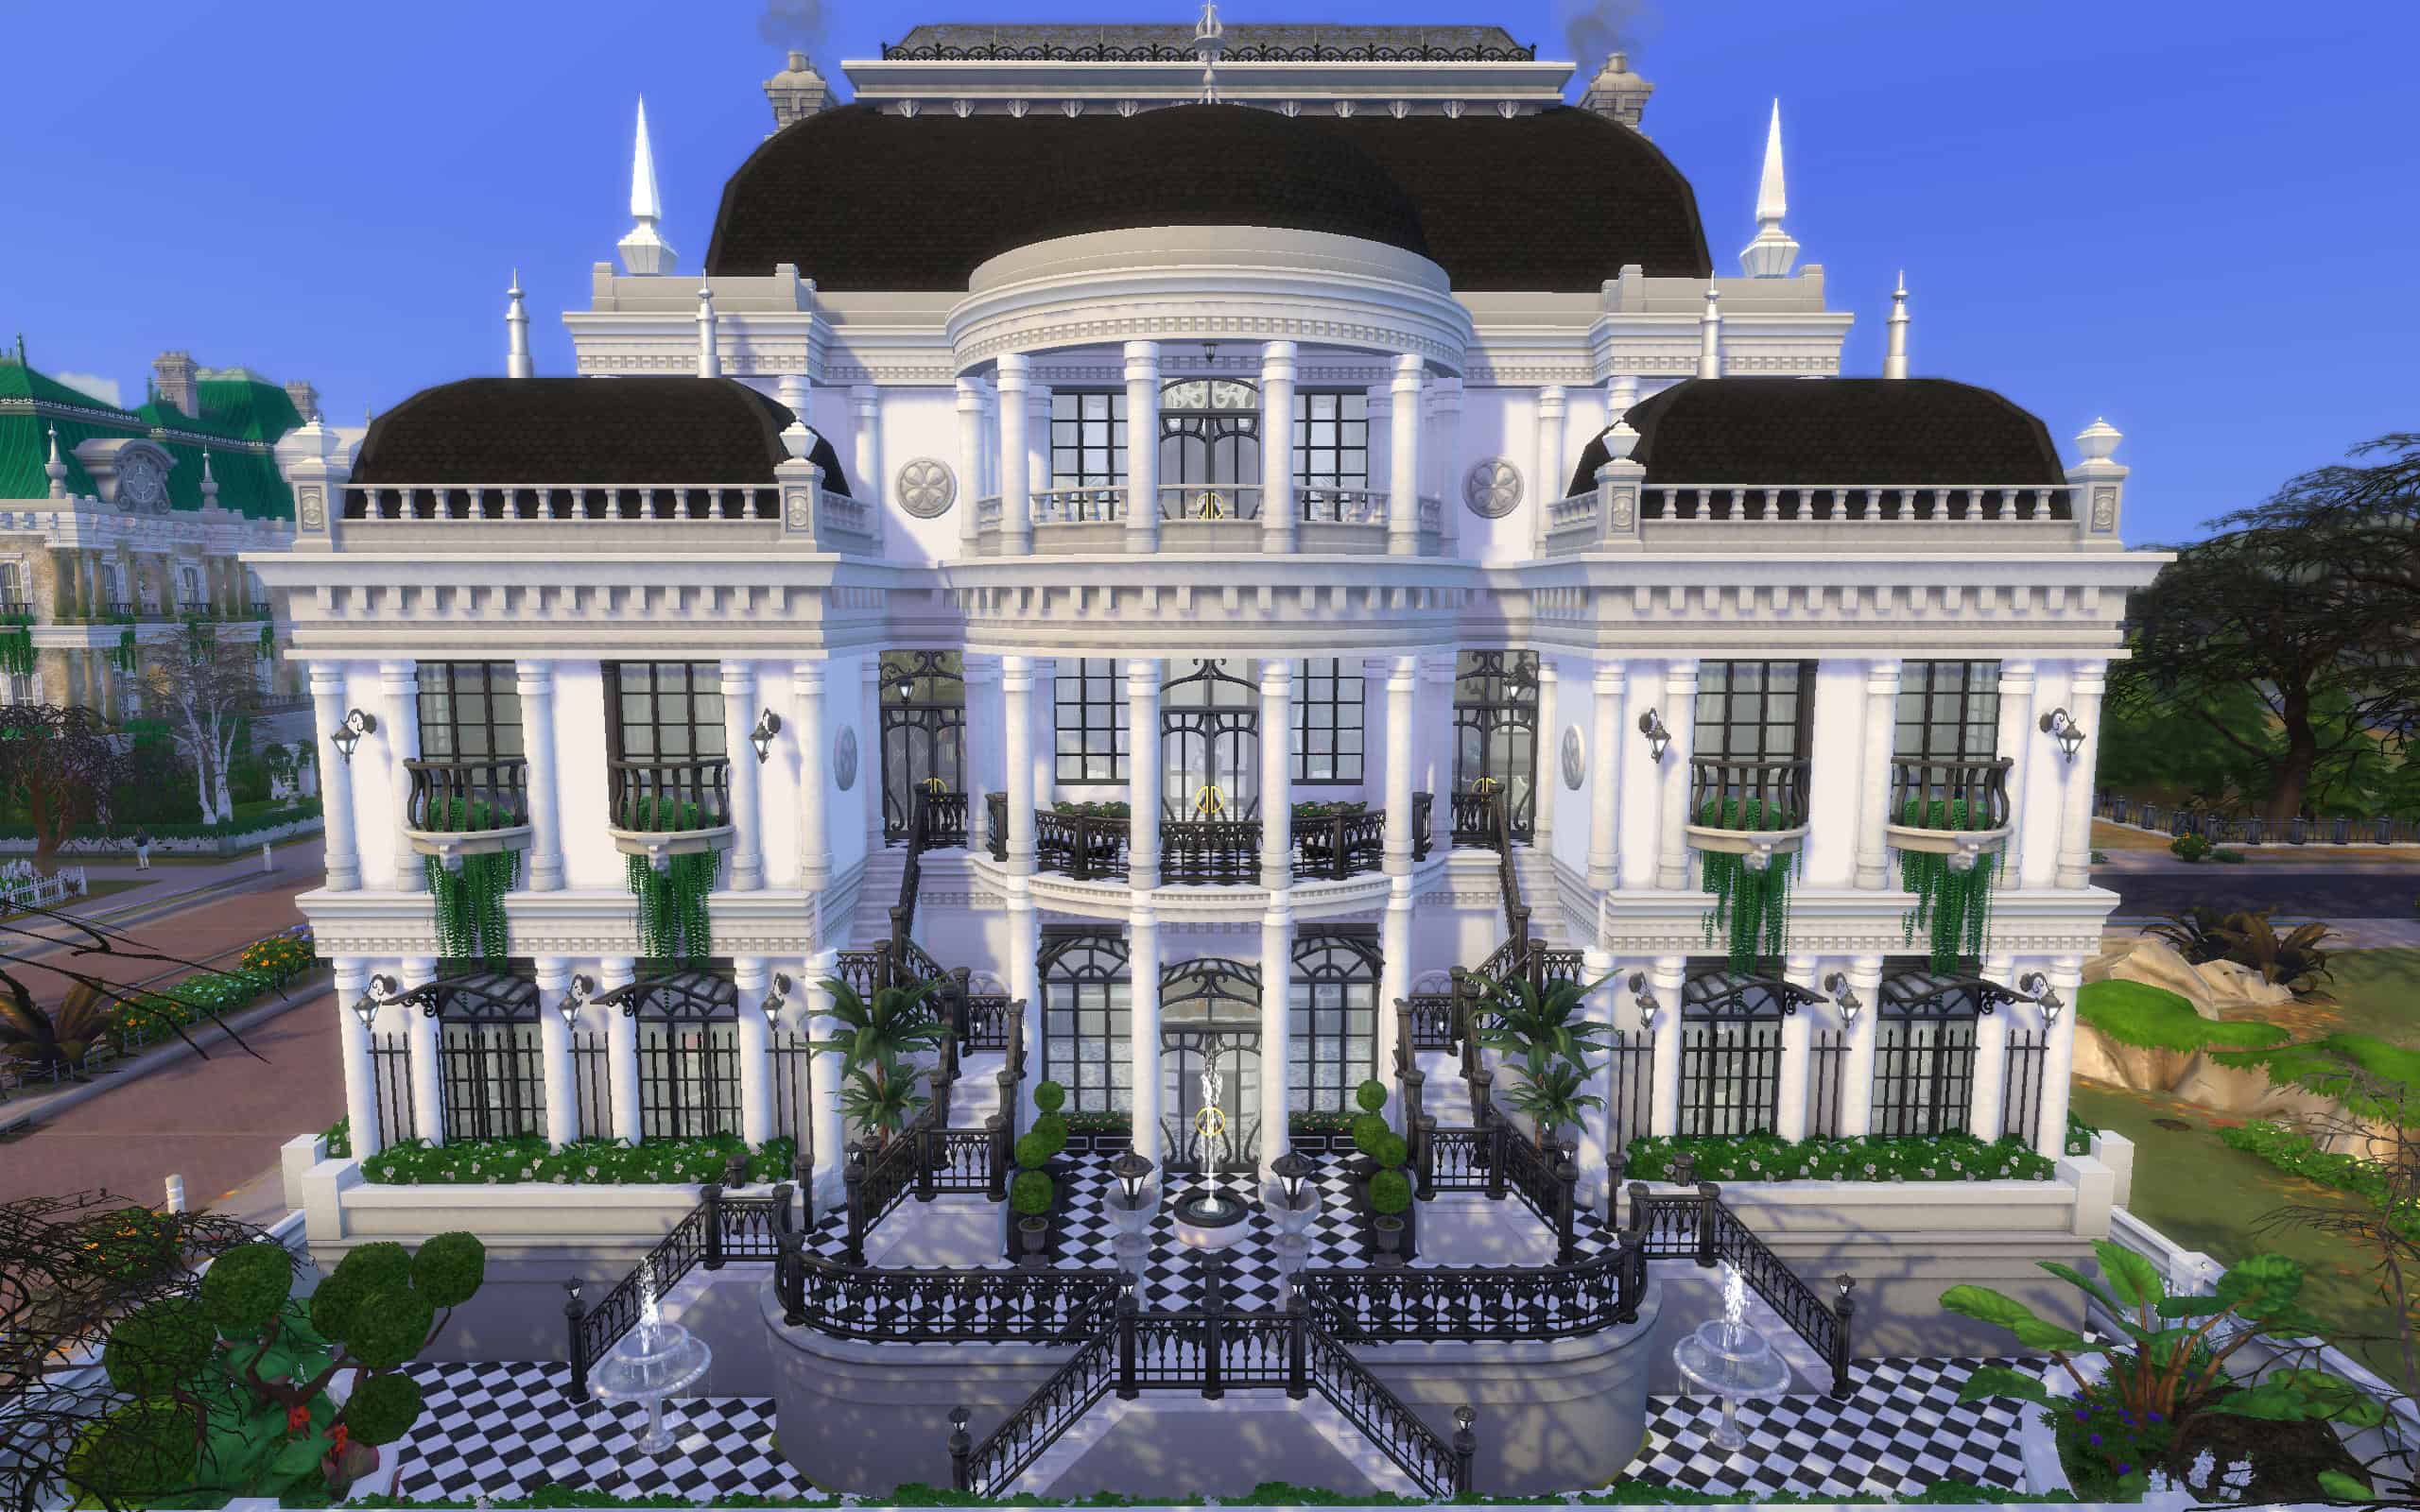 The City Palace Mod - Sims 4 Mod | Mod for Sims 4
